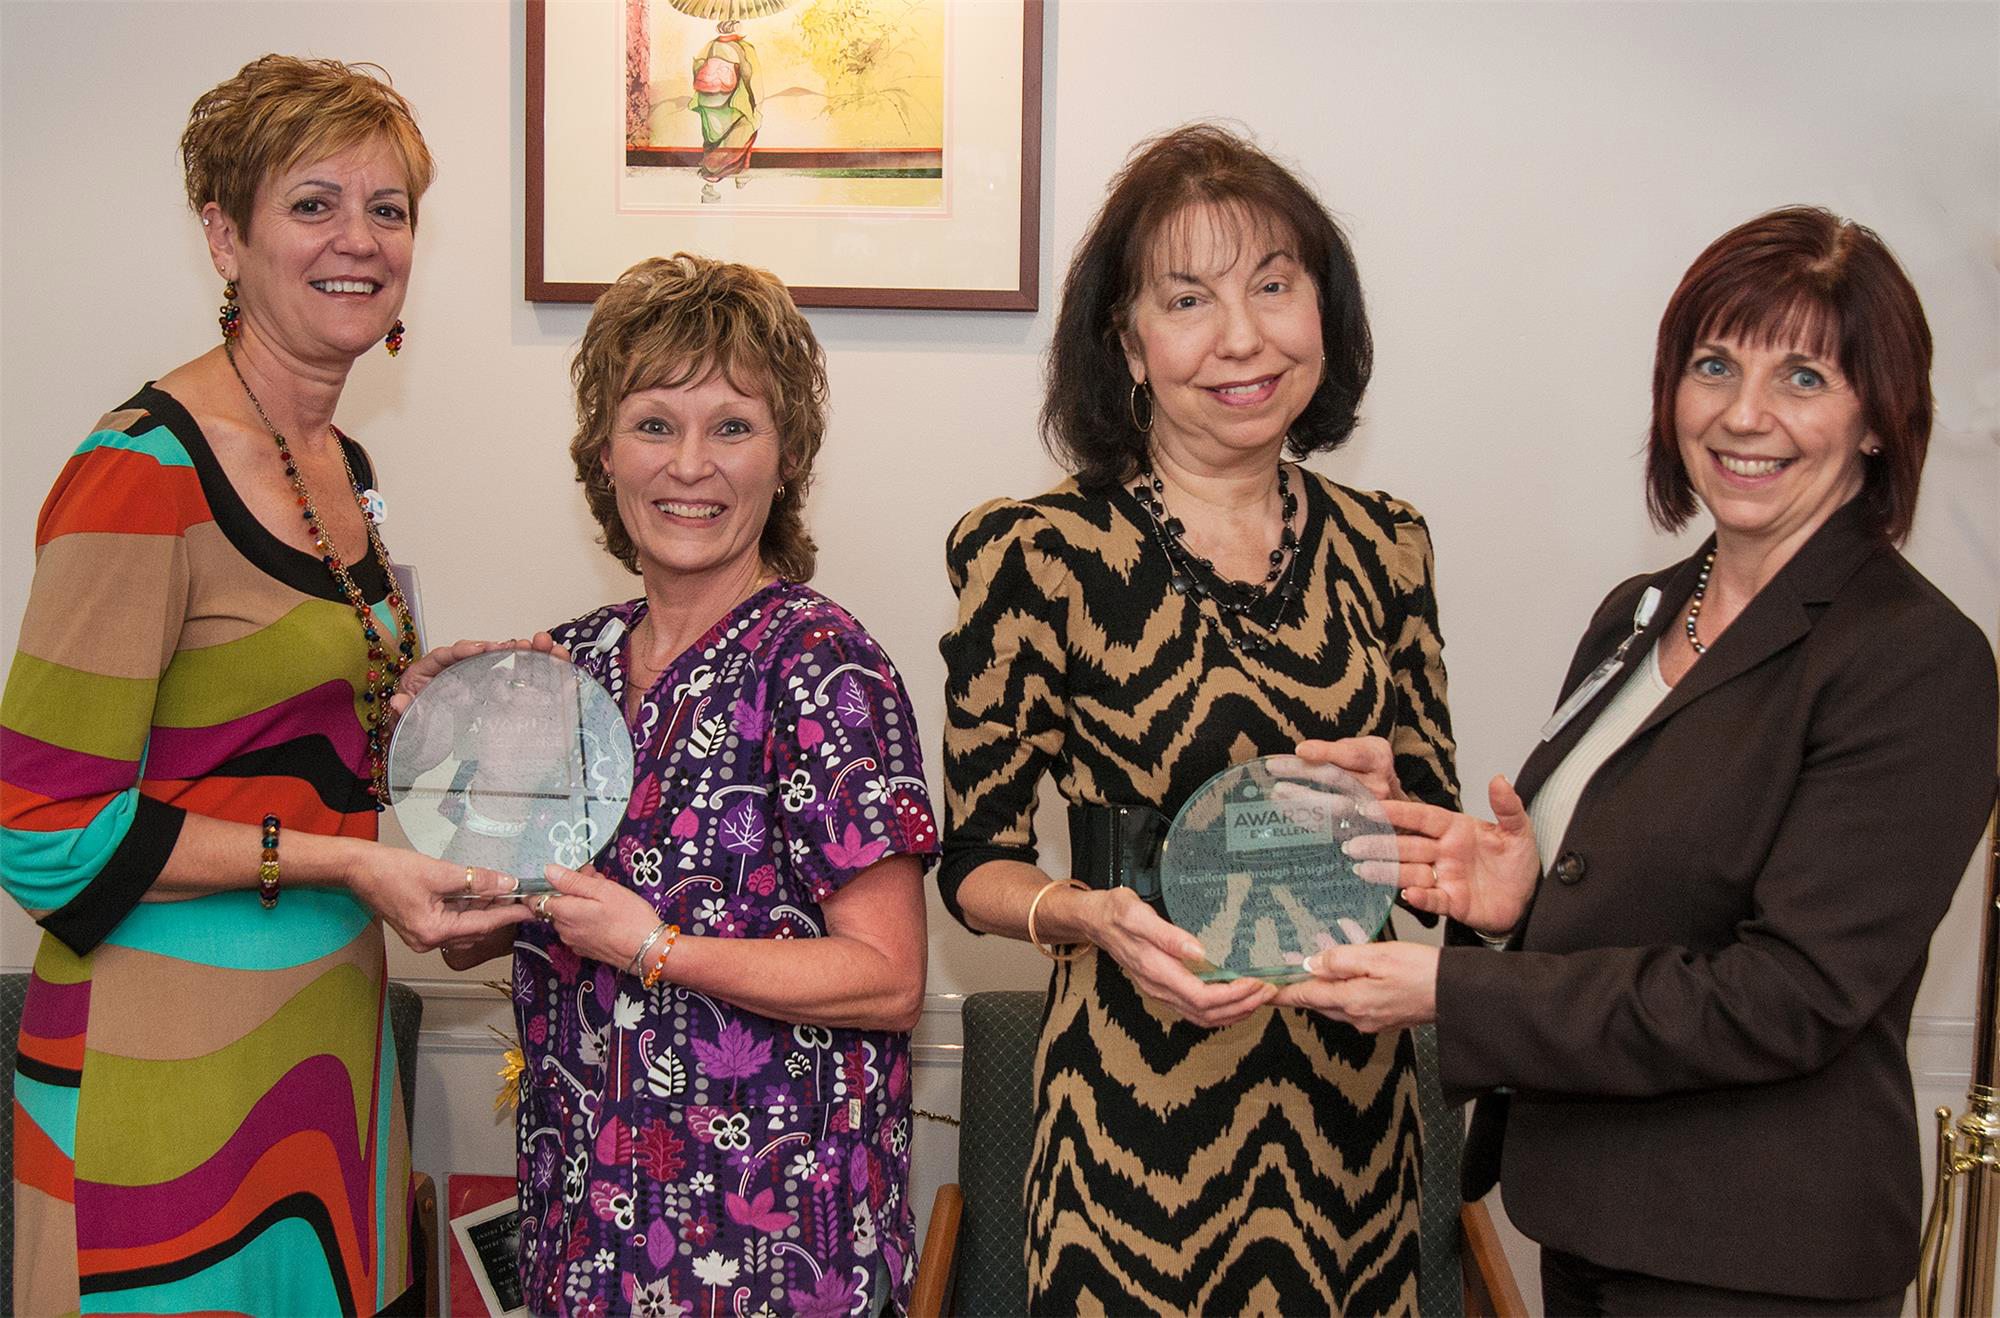 Receiving the award were Christine Garner, Rene Seduski, Paulette Schreiber and Rose Campbell, hospital president.